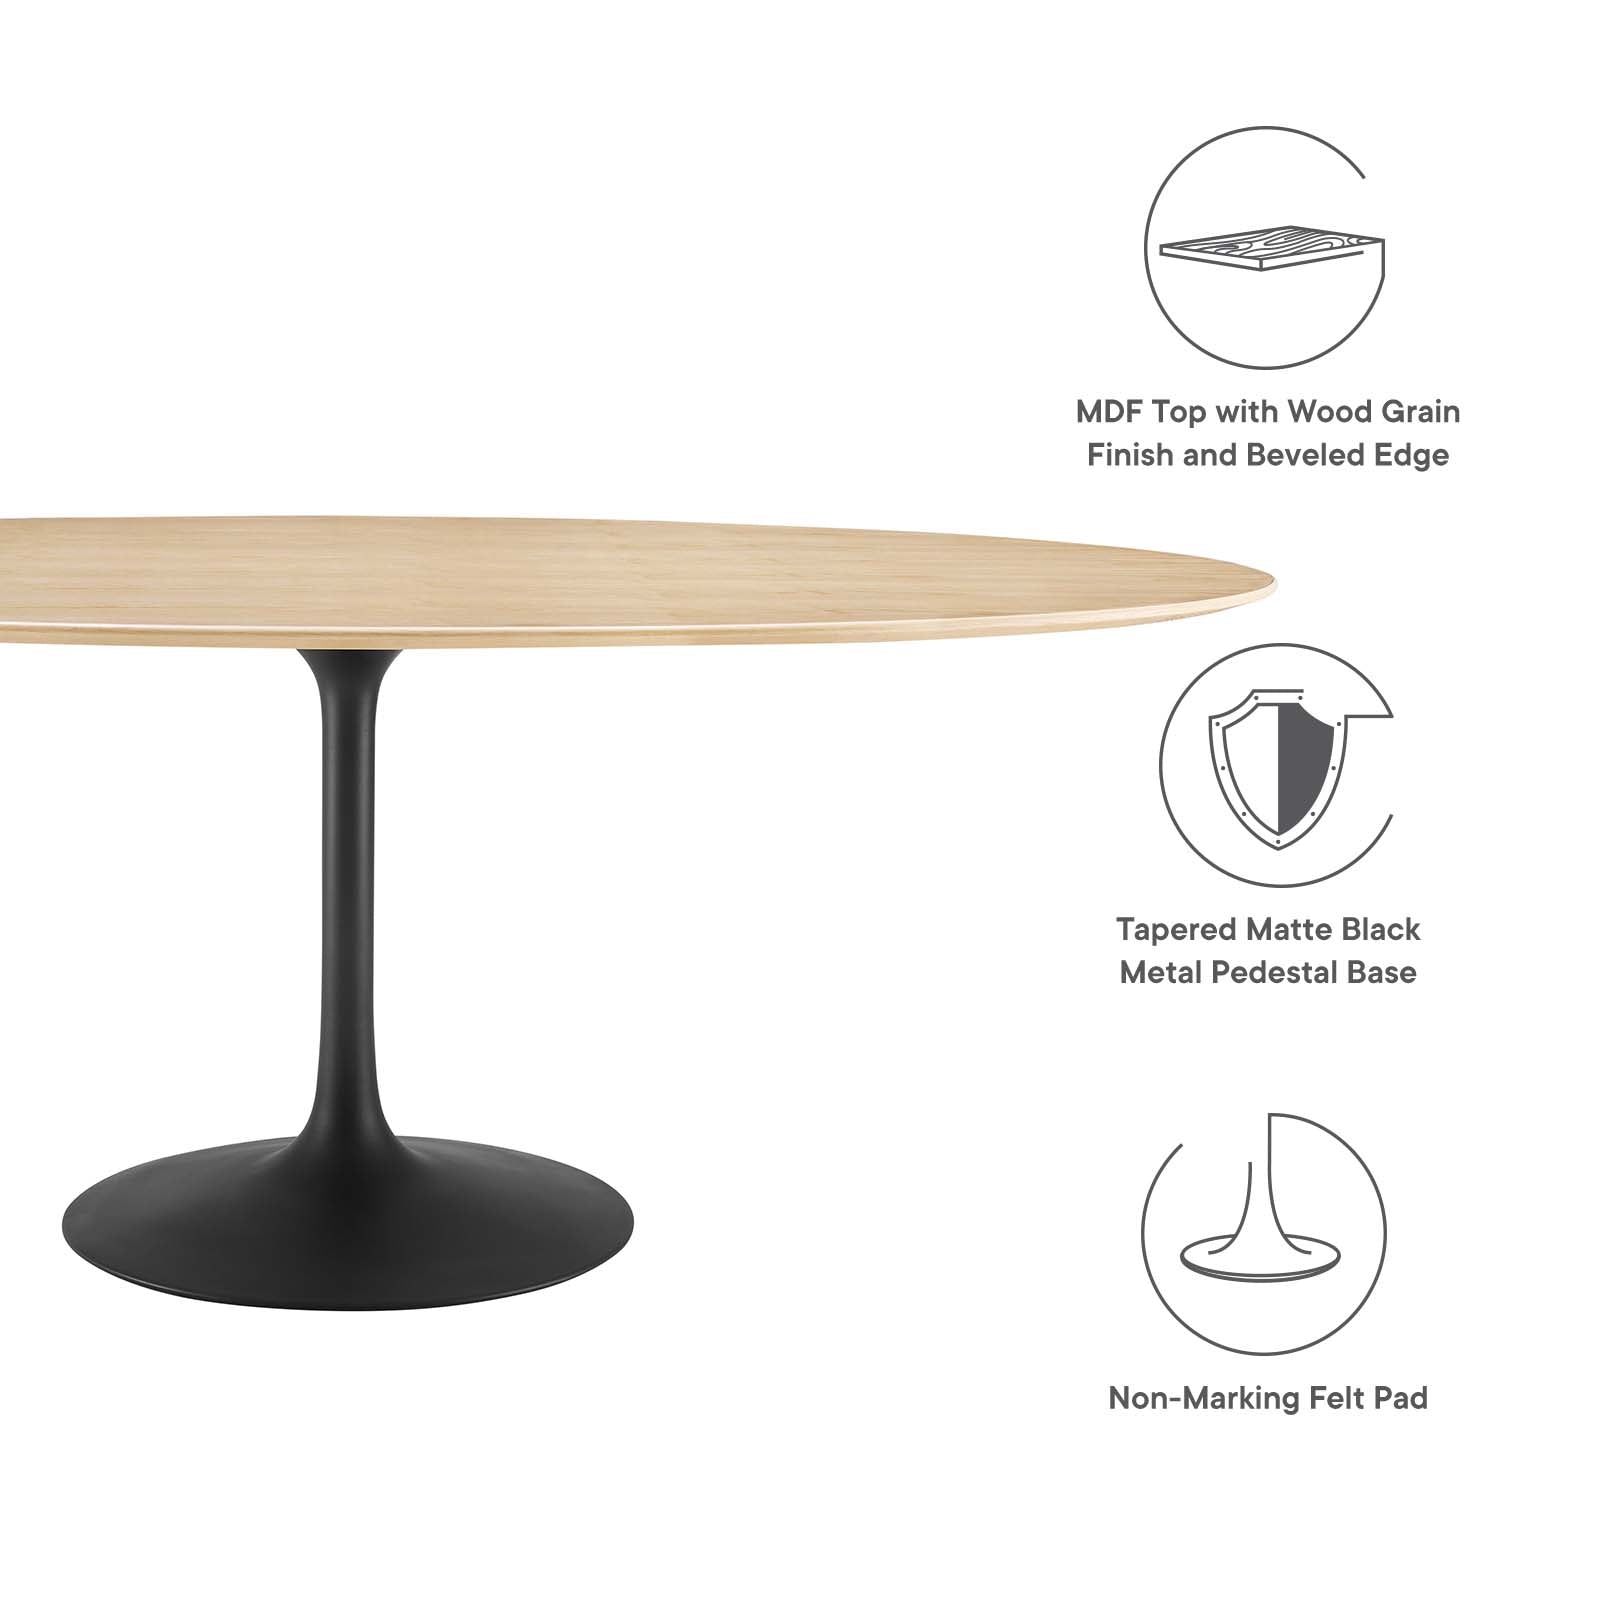 Lippa 78" Wood Oval Dining Table